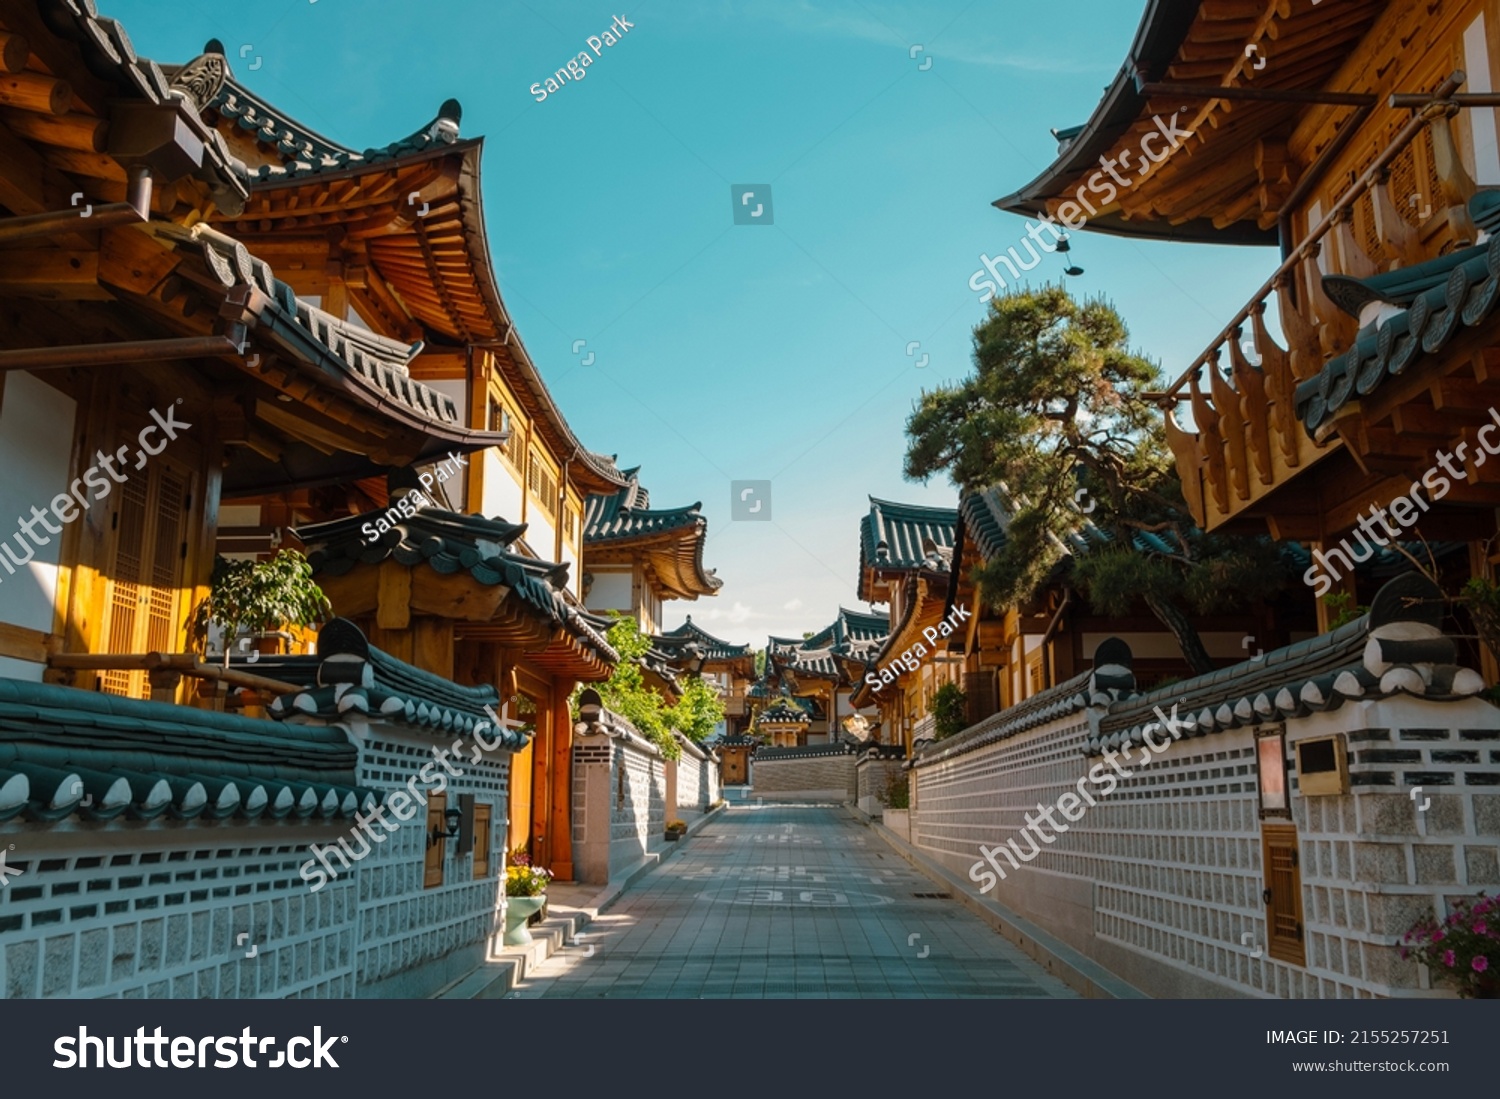 Eunpyeong Hanok Village, Korean traditional house in Seoul, Korea #2155257251